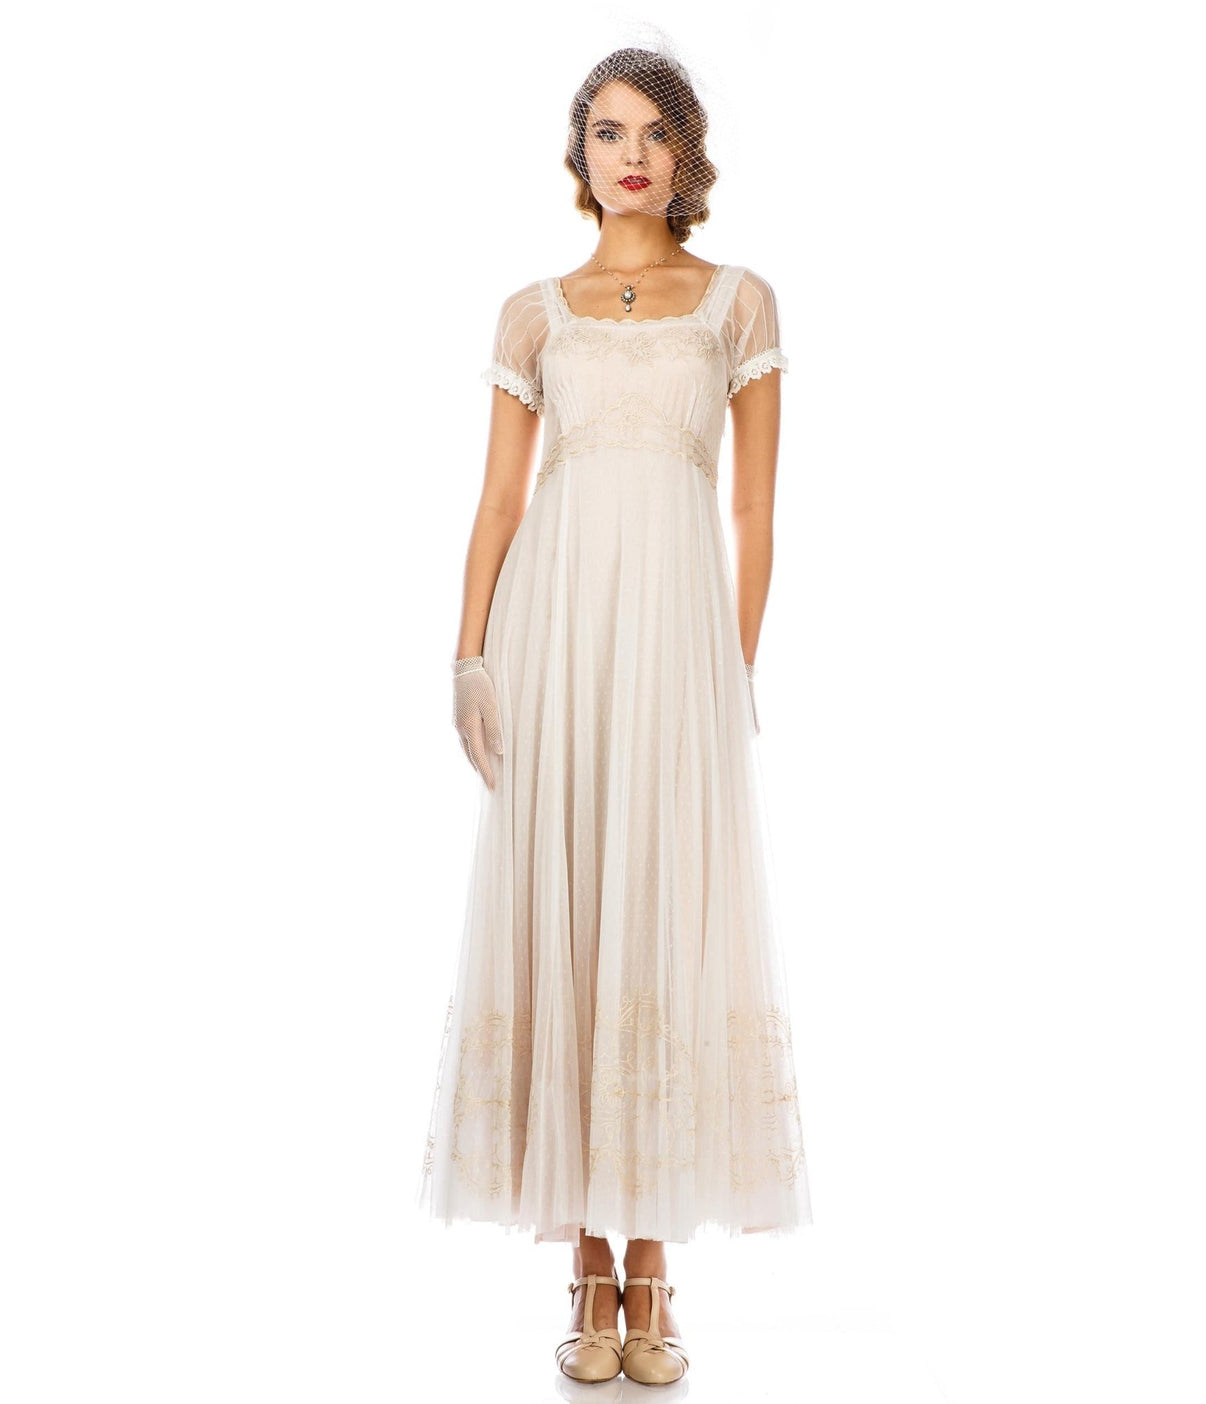 Nataya Ivory Vintage Style Regency Wedding Dress – Unique Vintage